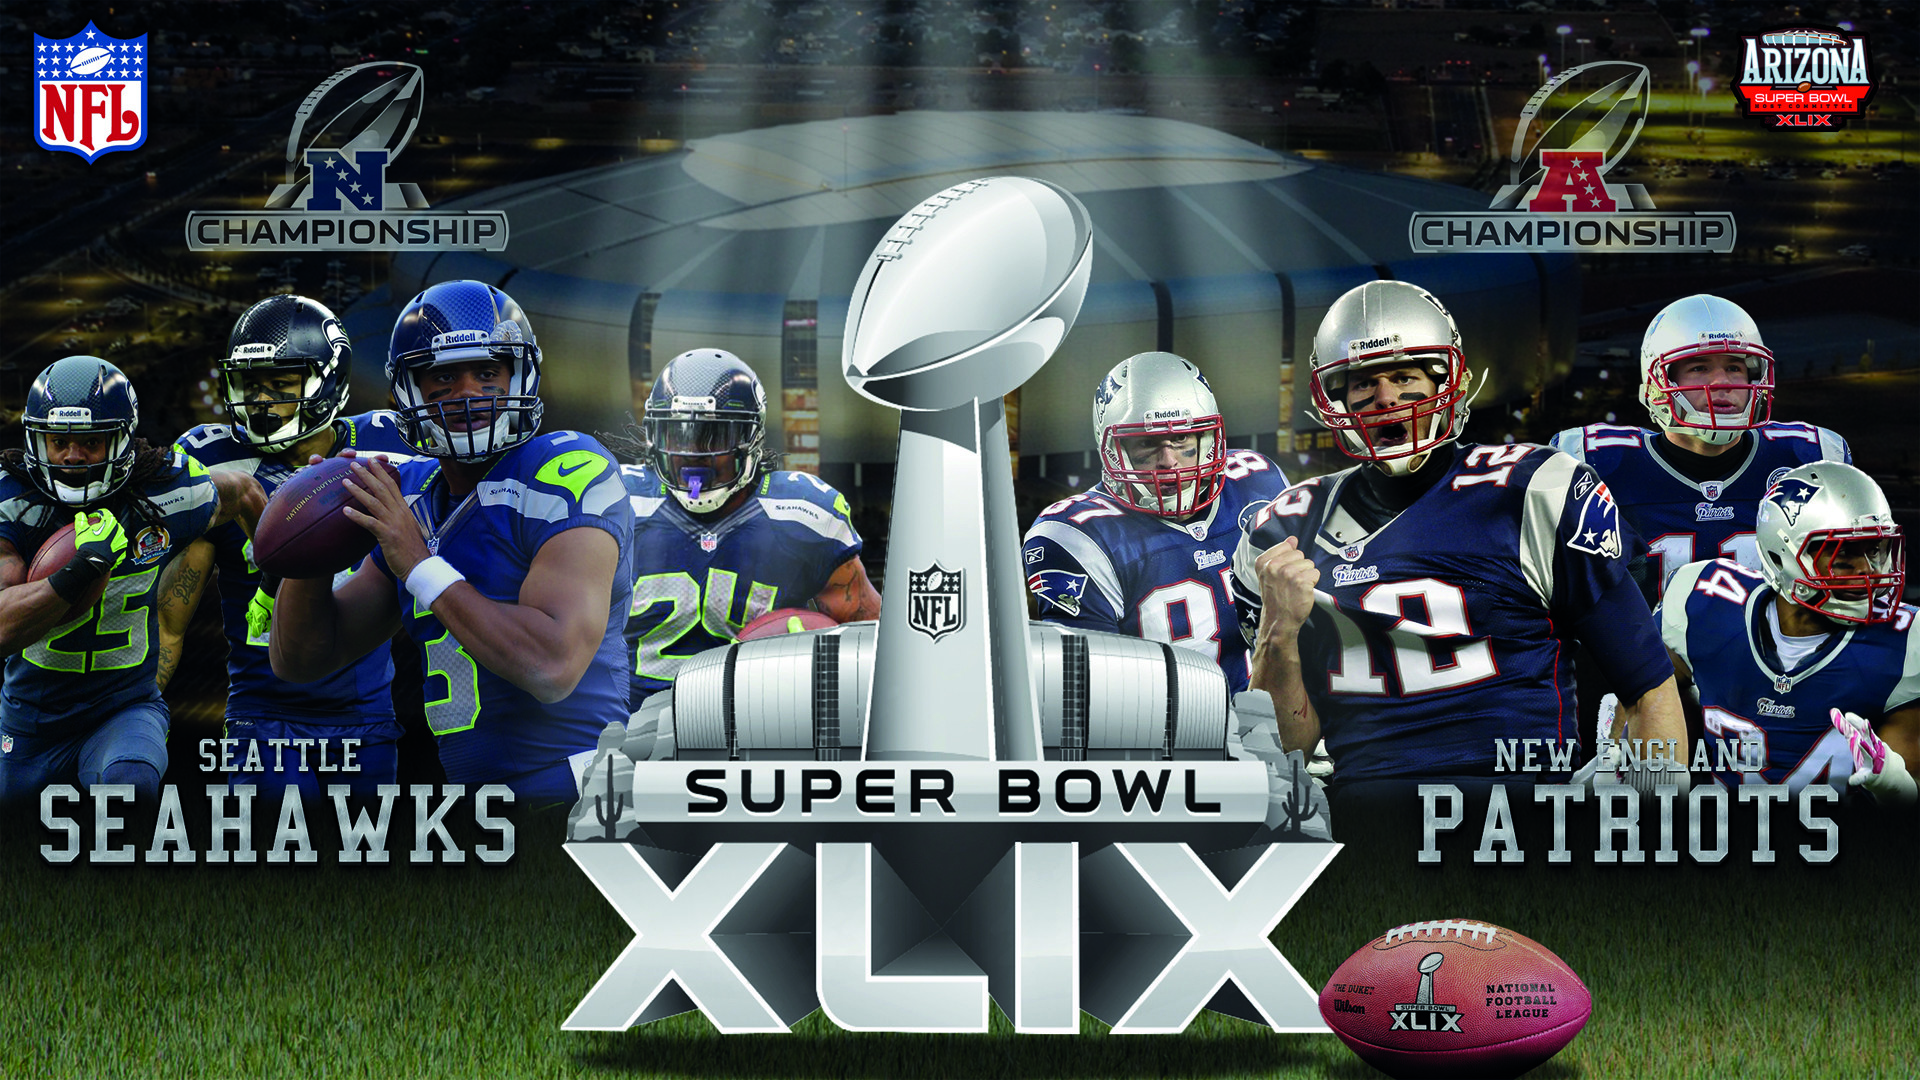 Super Bowl Wallpaper Image